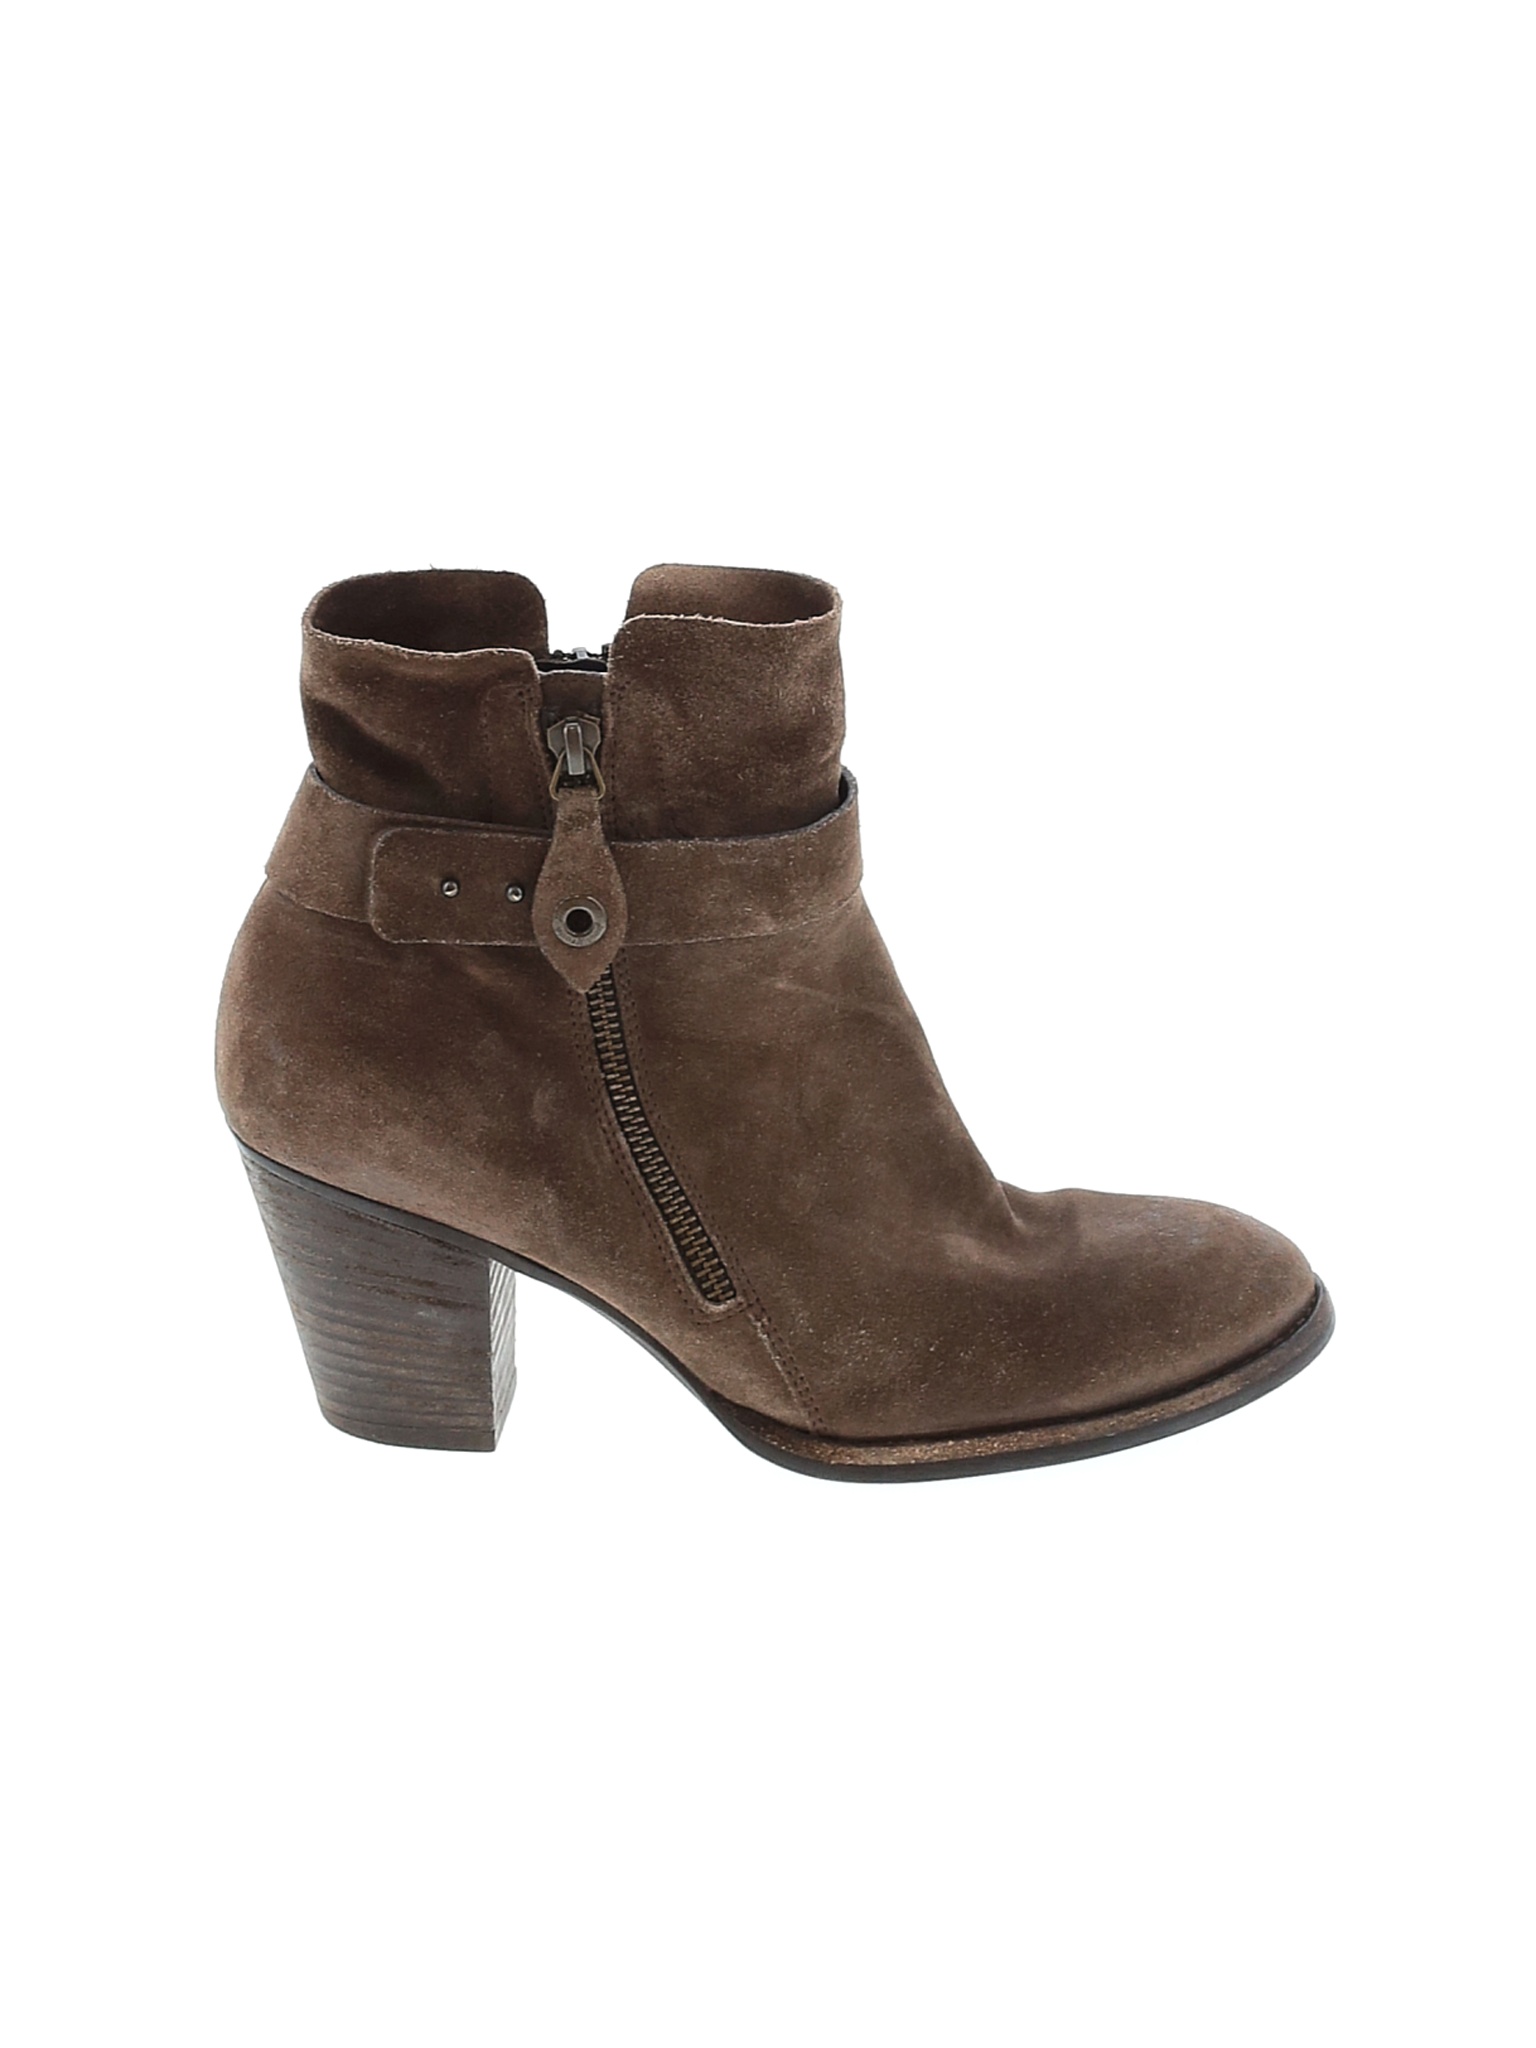 Paul Green Women Brown Ankle Boots US 7 | eBay